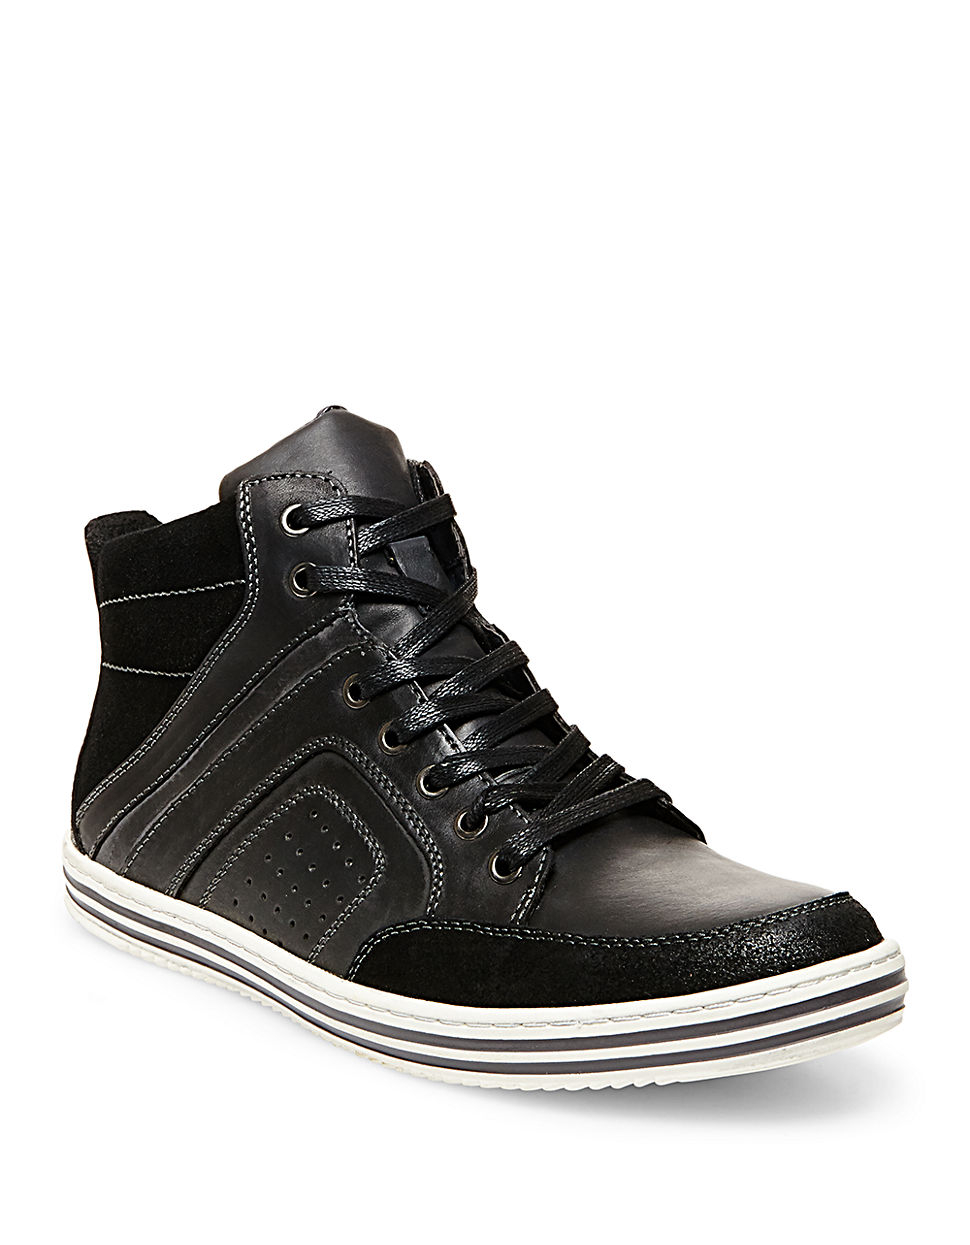 Steve Madden Ristt Leather Hi-Top Sneakers in Black for Men